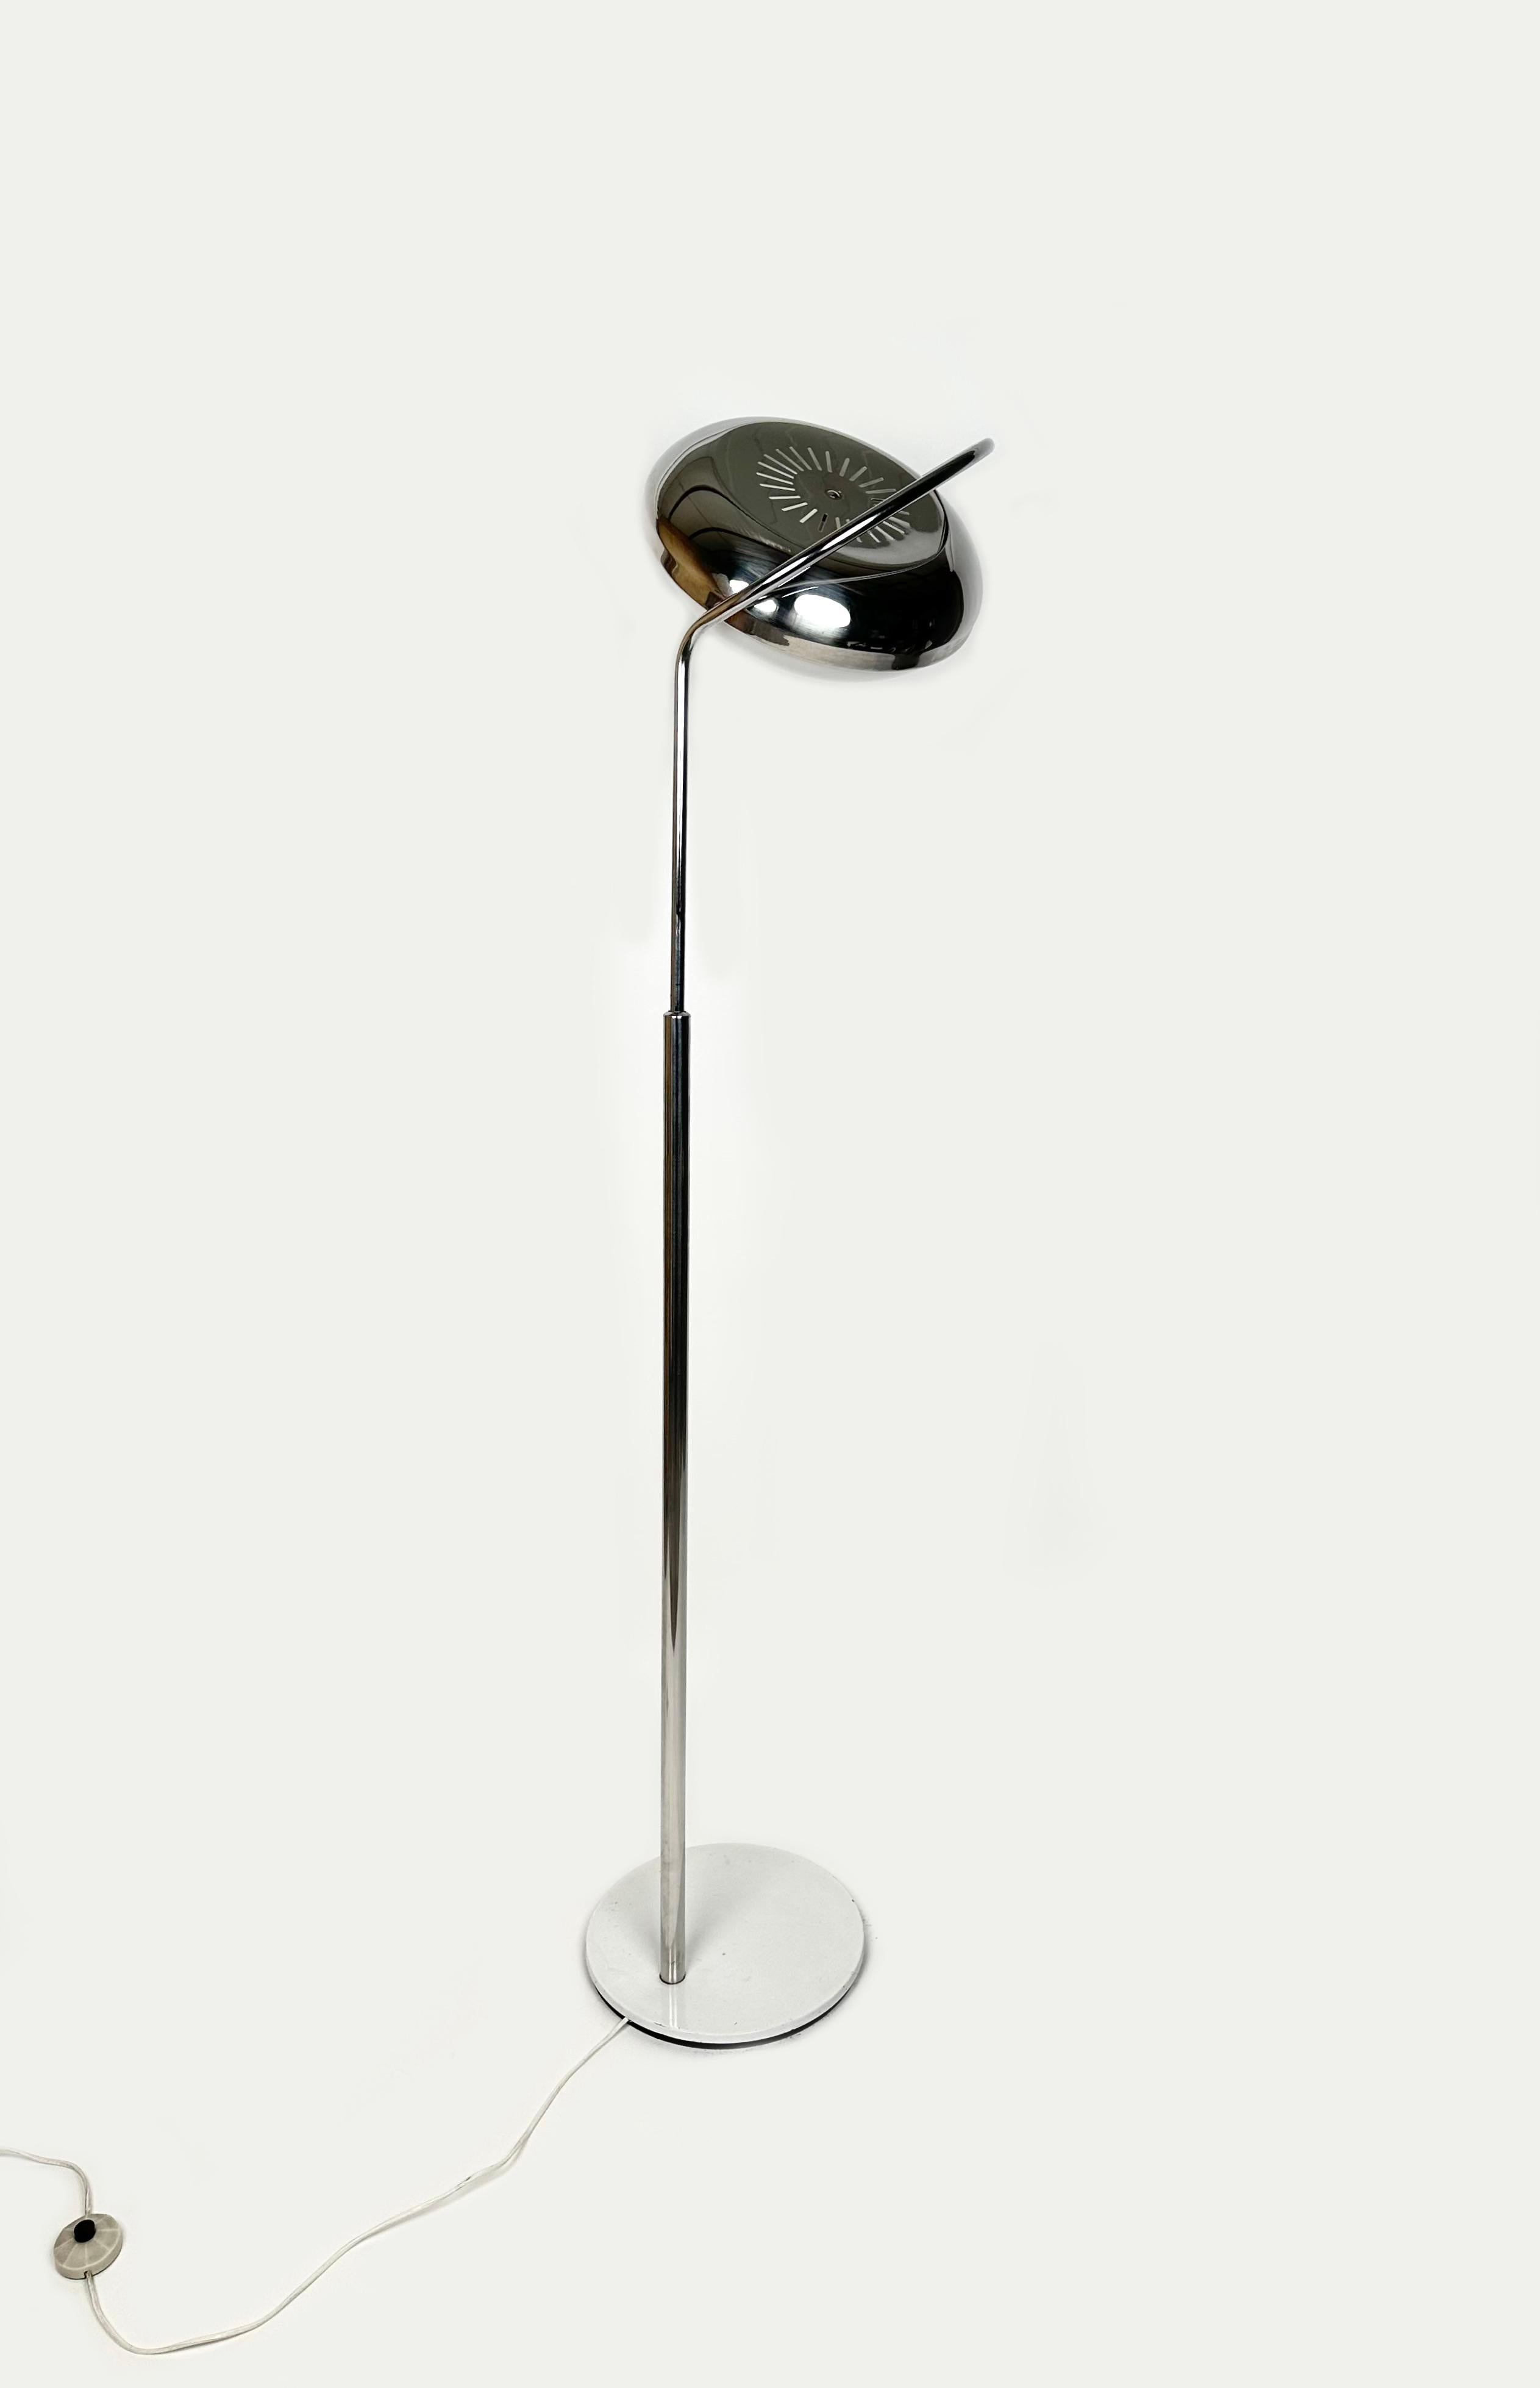 Midcentury Adjustable Floor Lamp in Chrome & Plexiglass by Reggiani, Italy 1970s For Sale 4